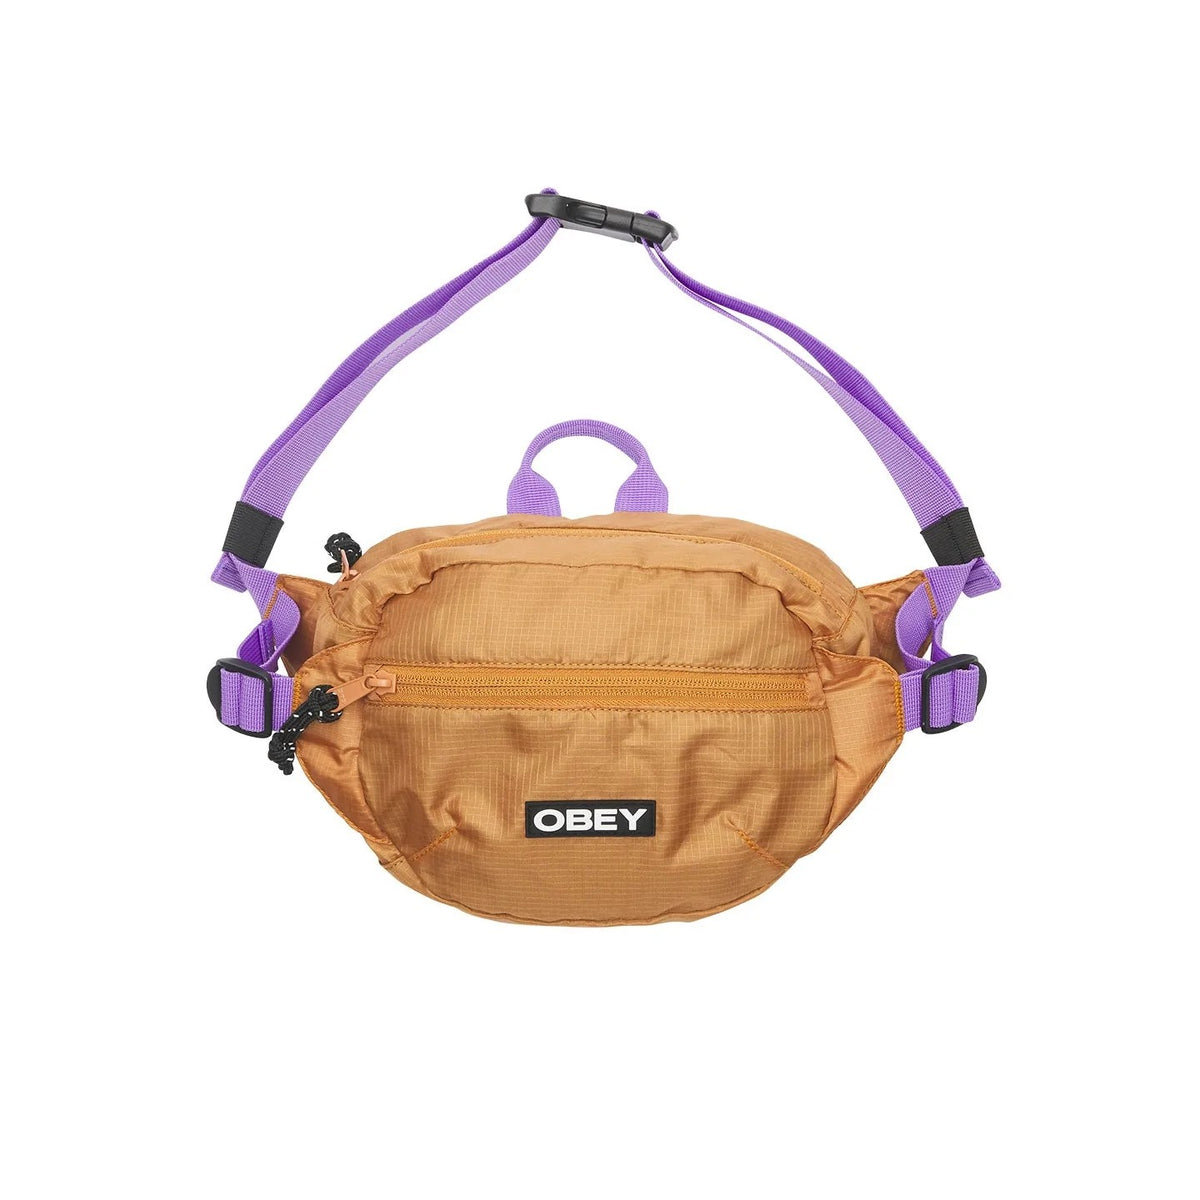 OBEY - Commuter Waist Bag, Brown Multi